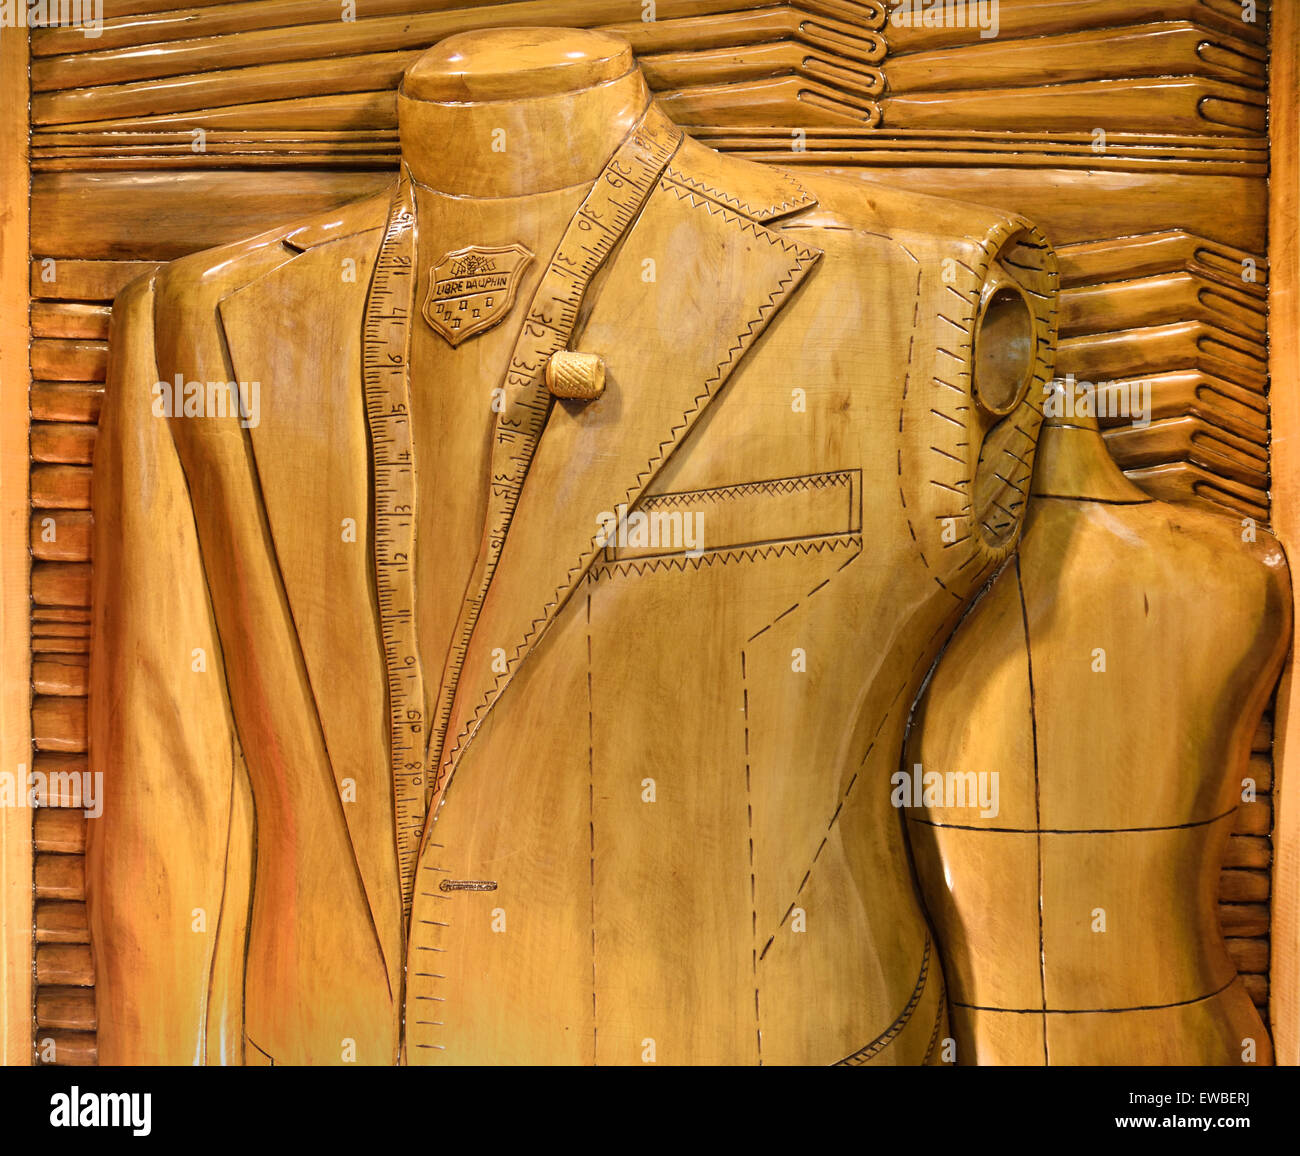 Sur mesure sur mesure Sur mesure costumes chemises Shanghai China Chinese  Photo Stock - Alamy